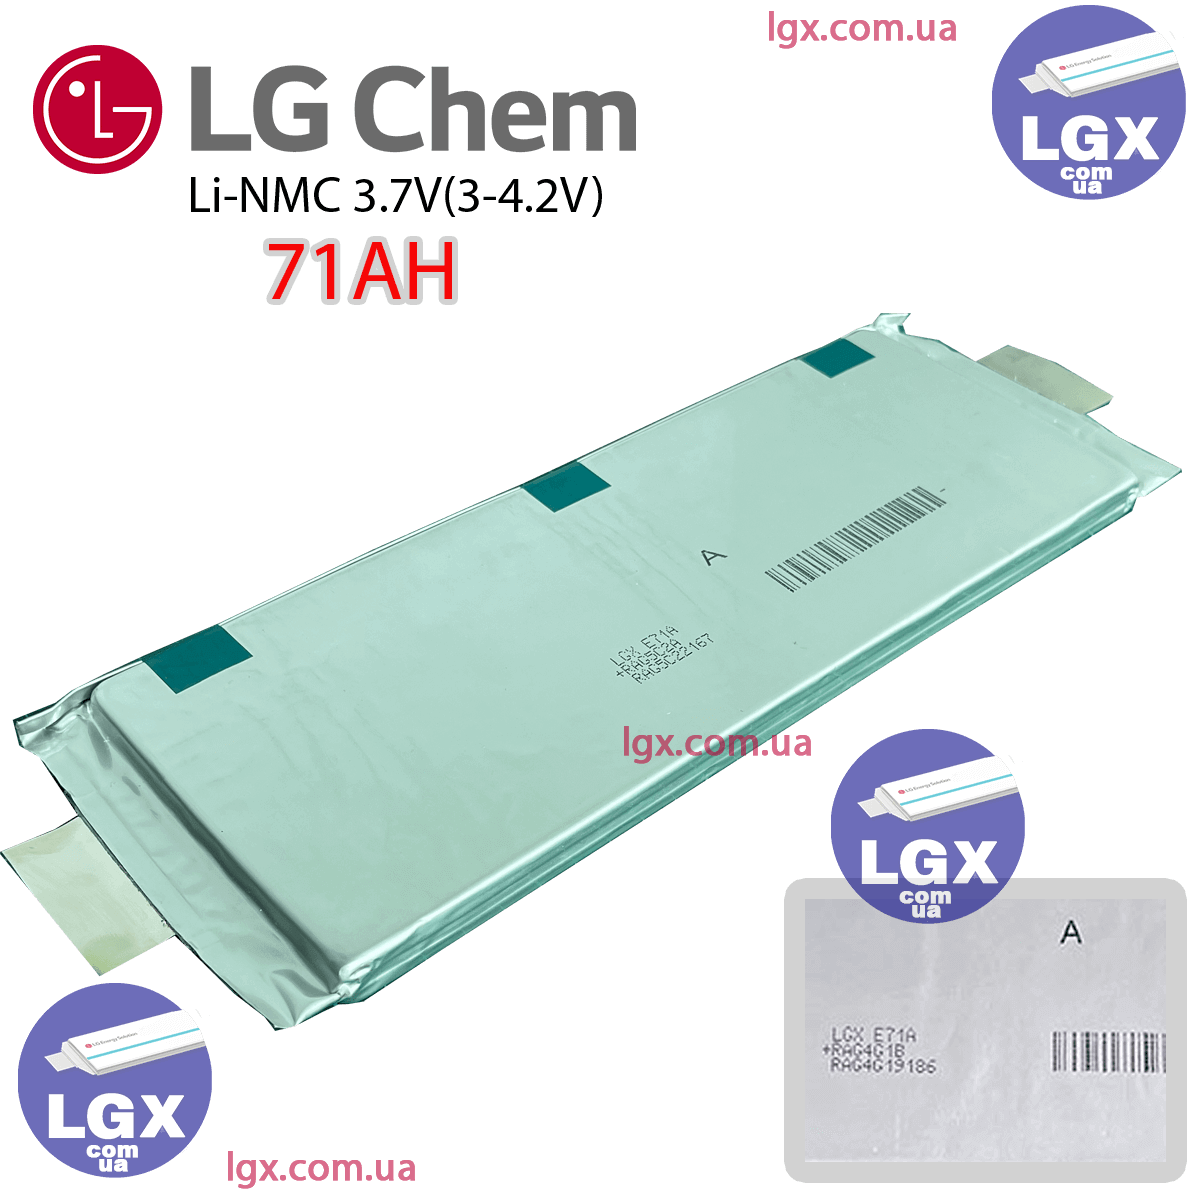 Аккумуляторный елемент LG-Chem LGX-e71 химия NMC 3.6v (пакет) емкость 71А/Ч разряд 3-5c 2000 циклов 980грам